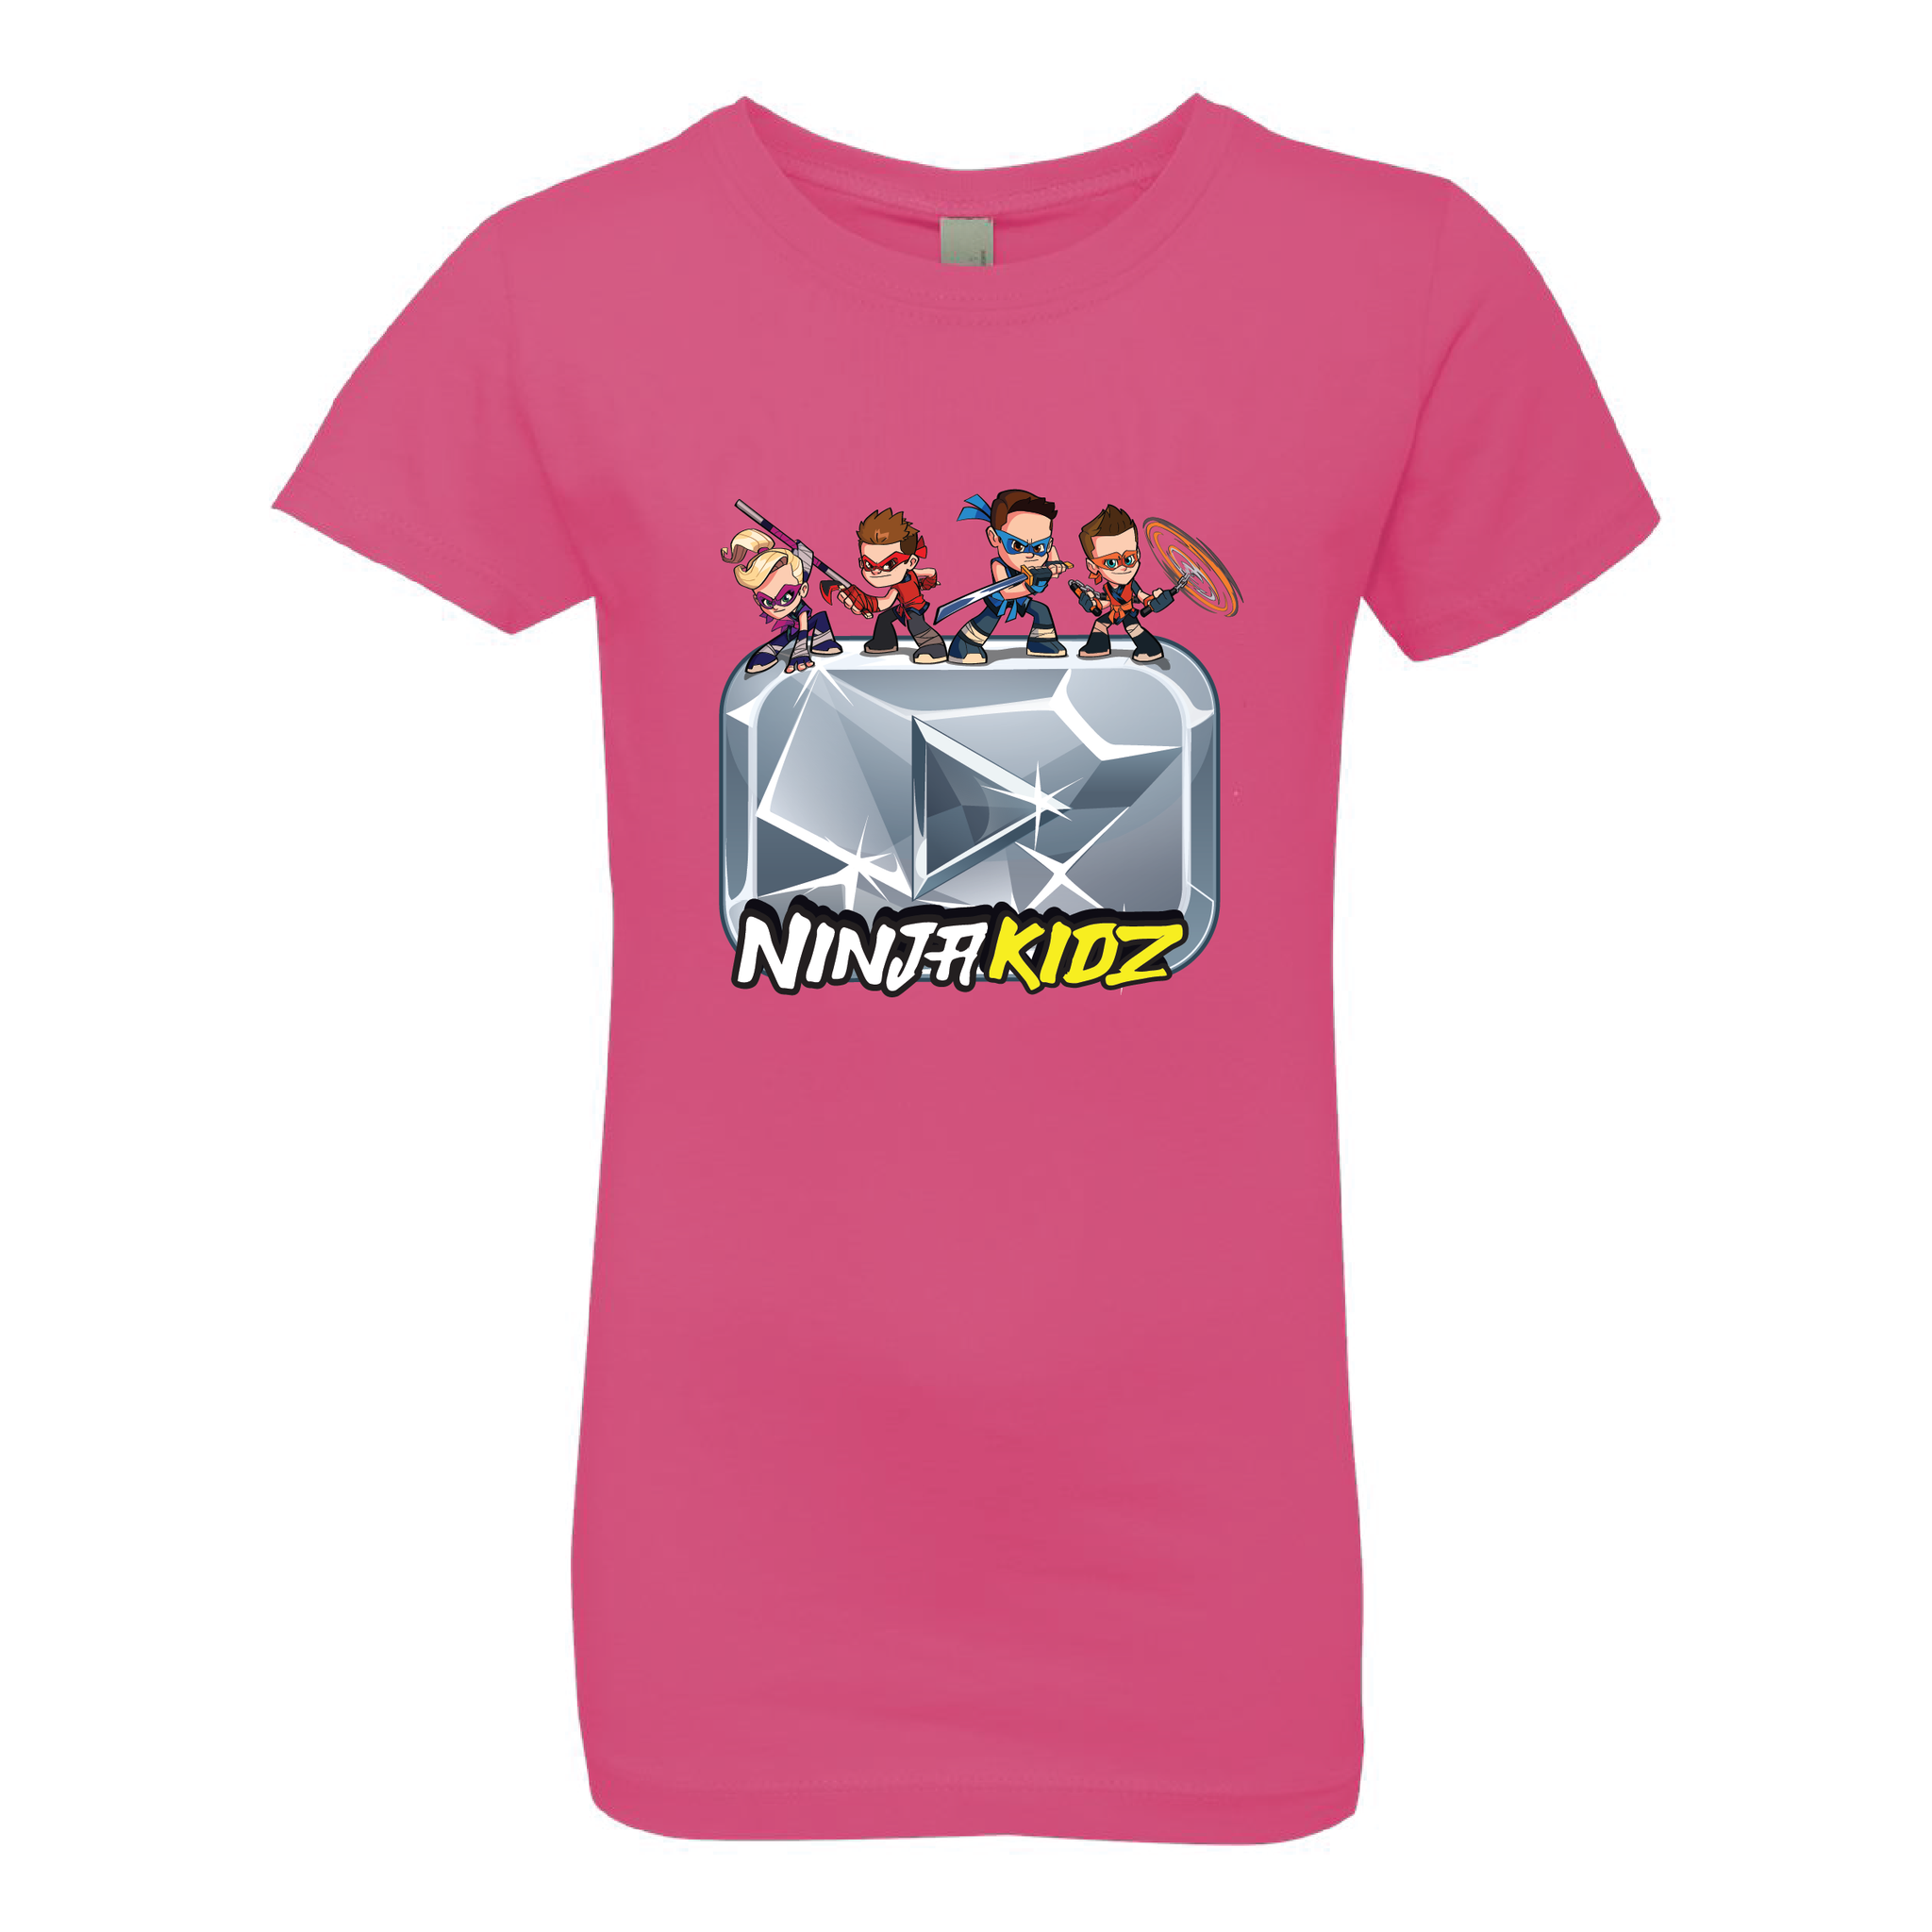 Ninja Kidz TV 15 Million Subscribers Autographed Ninja Kids T-shirt  Unboxing by Ninja Crosley 